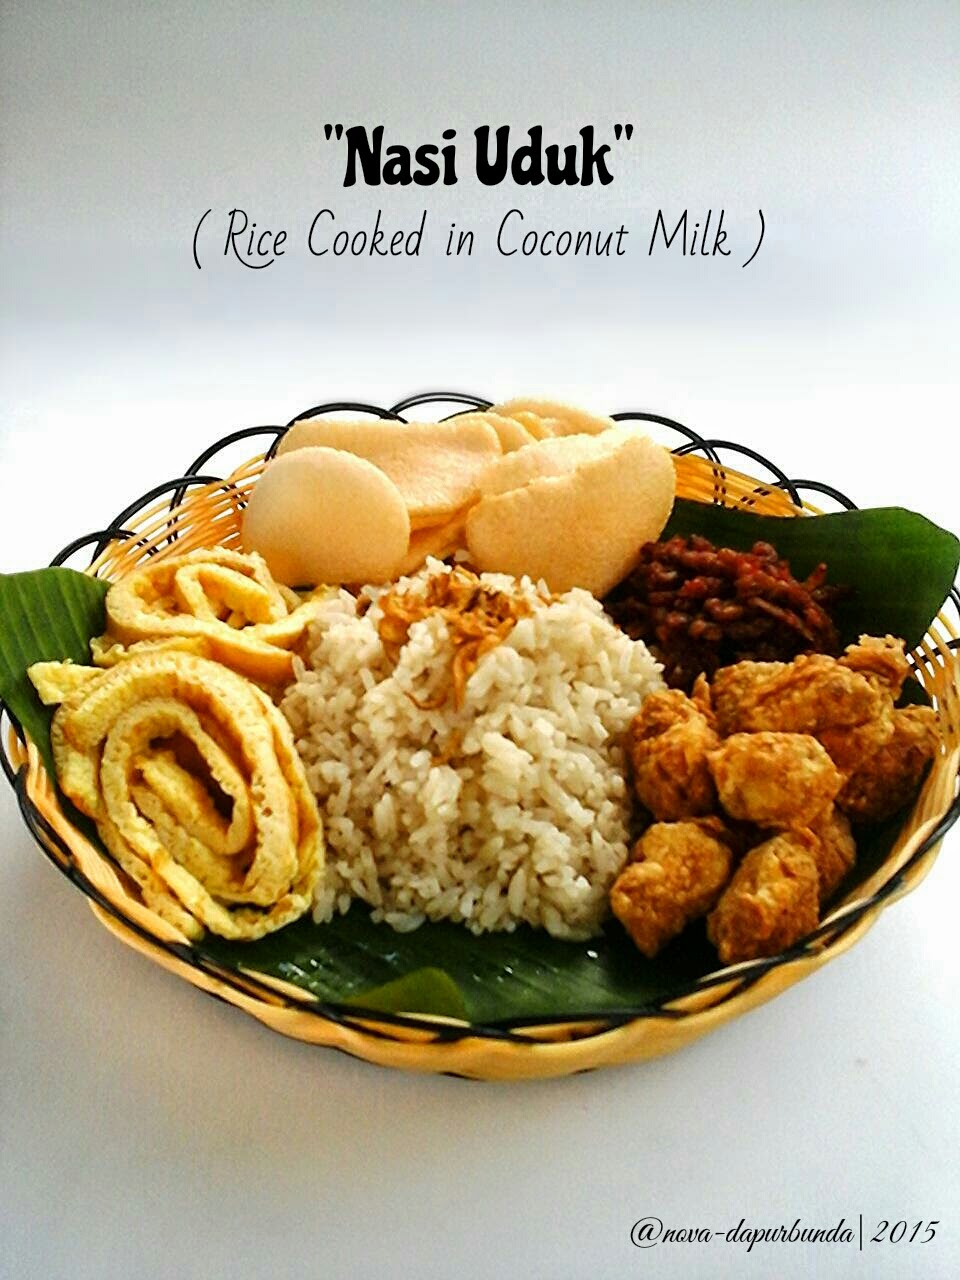 Dapur Bunda : Enjoy Your Homemade: "Nasi Uduk"